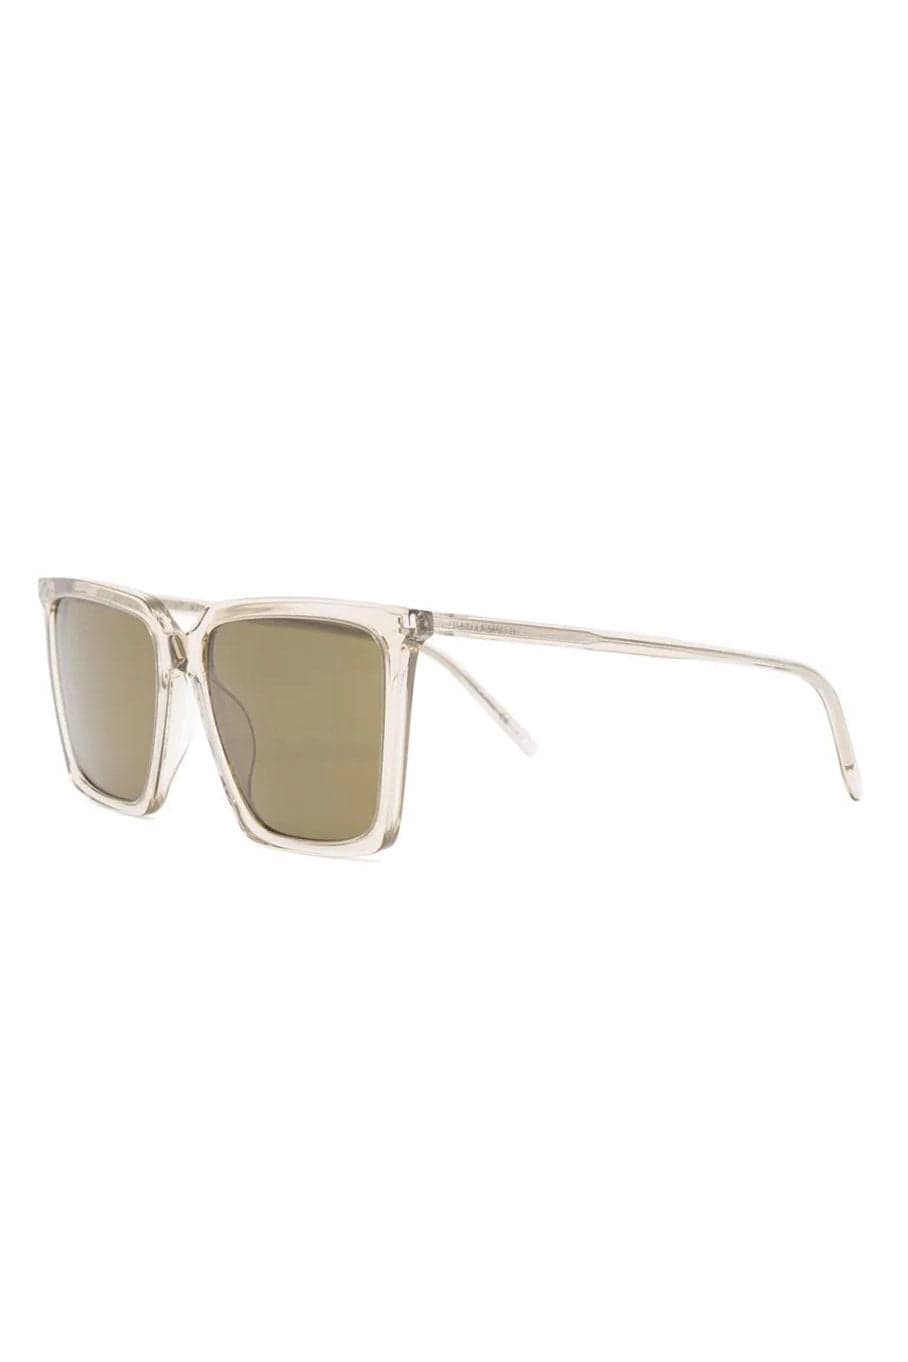 SAINT LAURENT-Oversized Rectangle Sunglasses-NUDE/BROWN